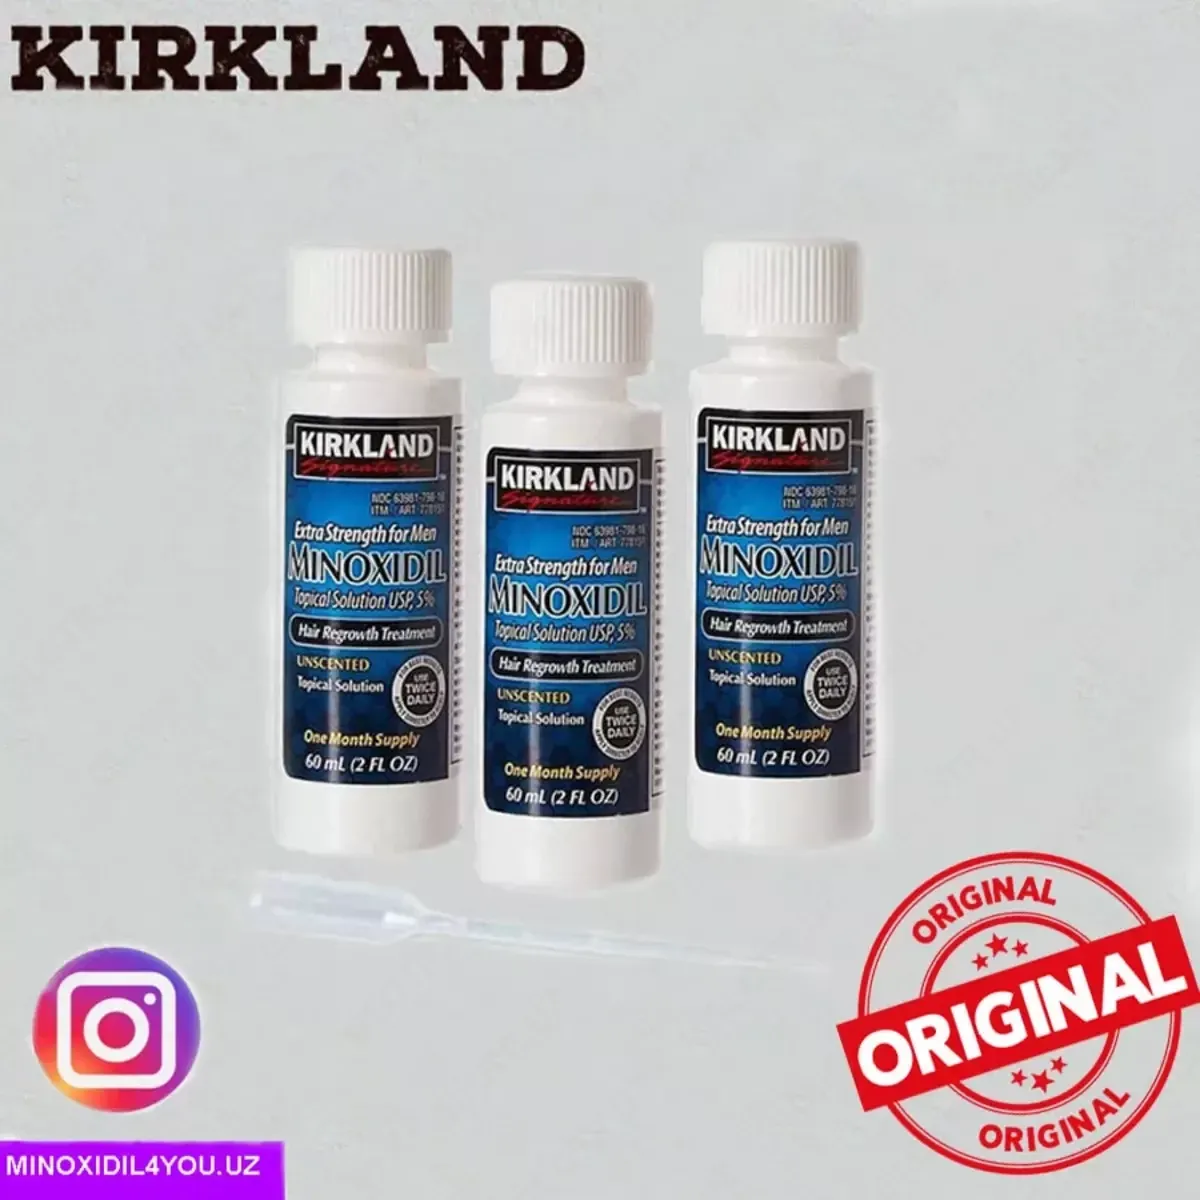 Minoxidil Kirkland 5 %#1